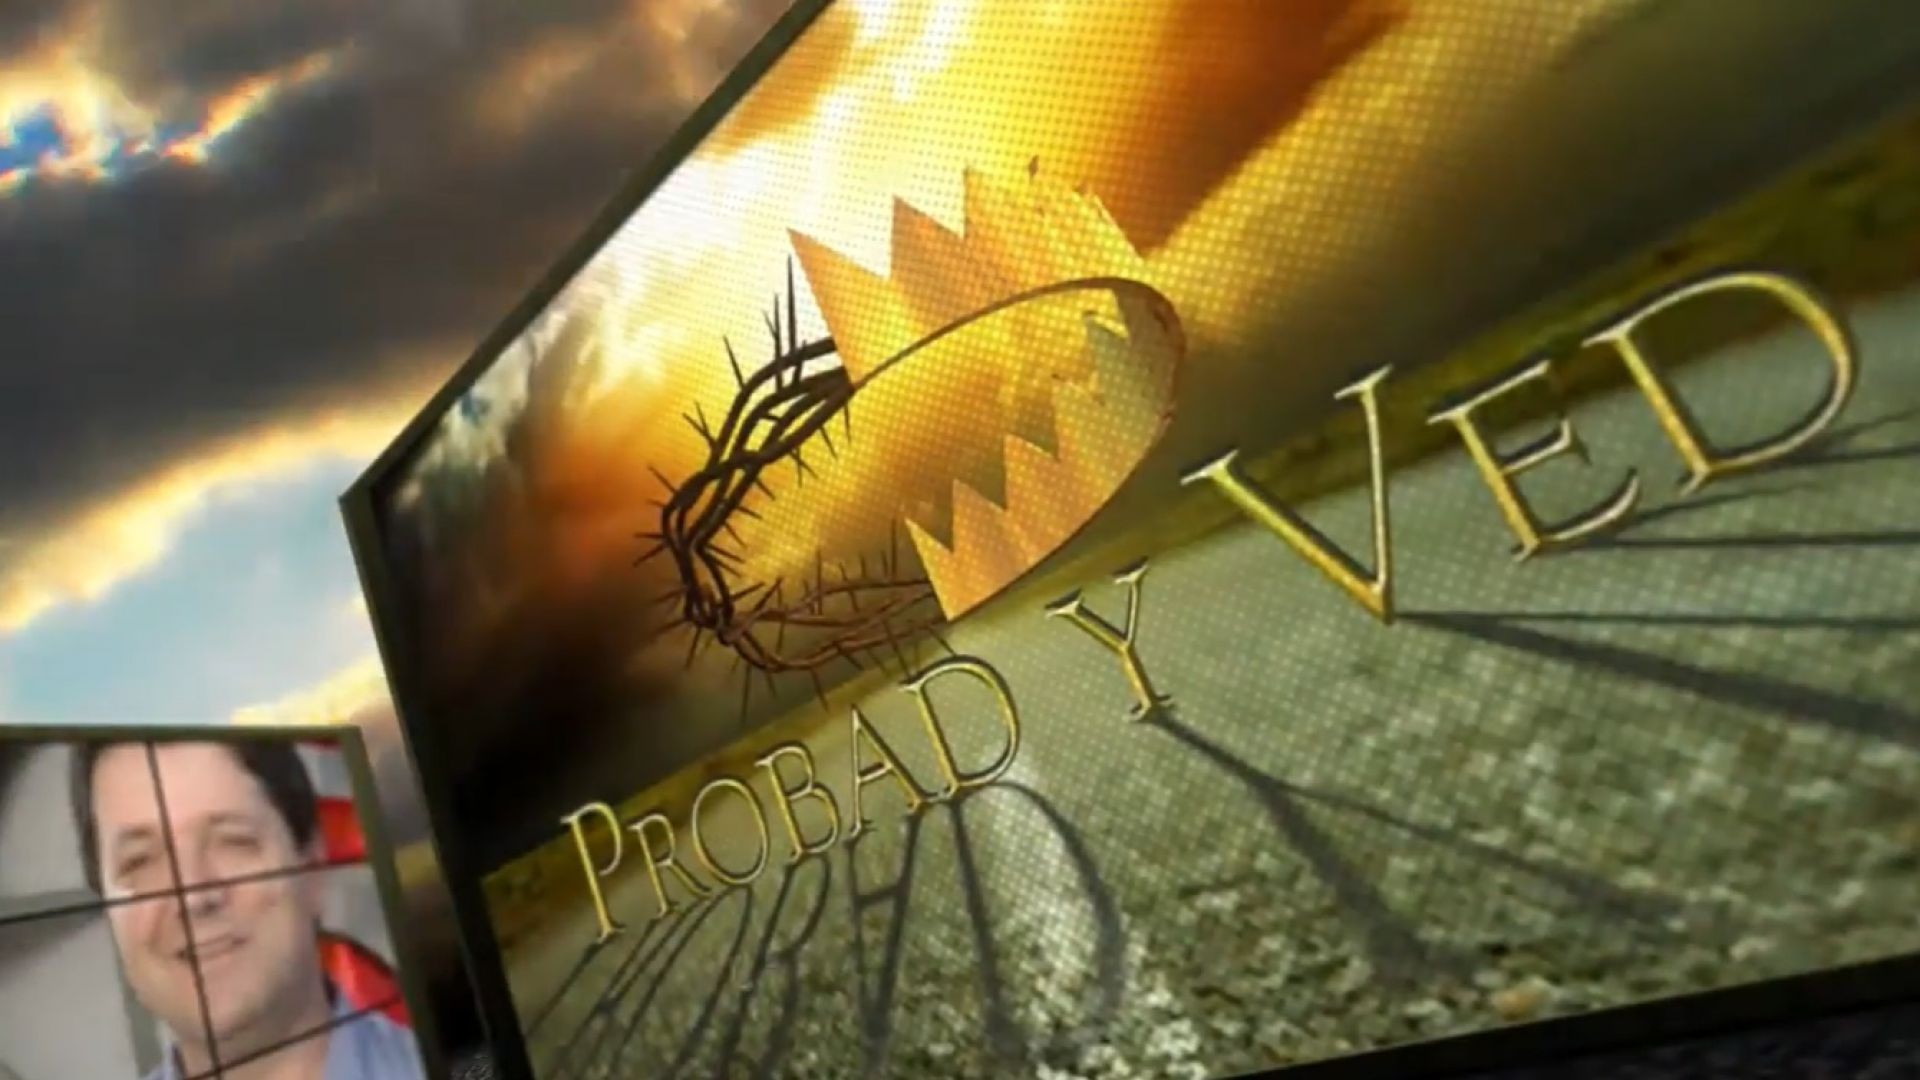 Probad y Ved 2012 - Iglesia comprometida